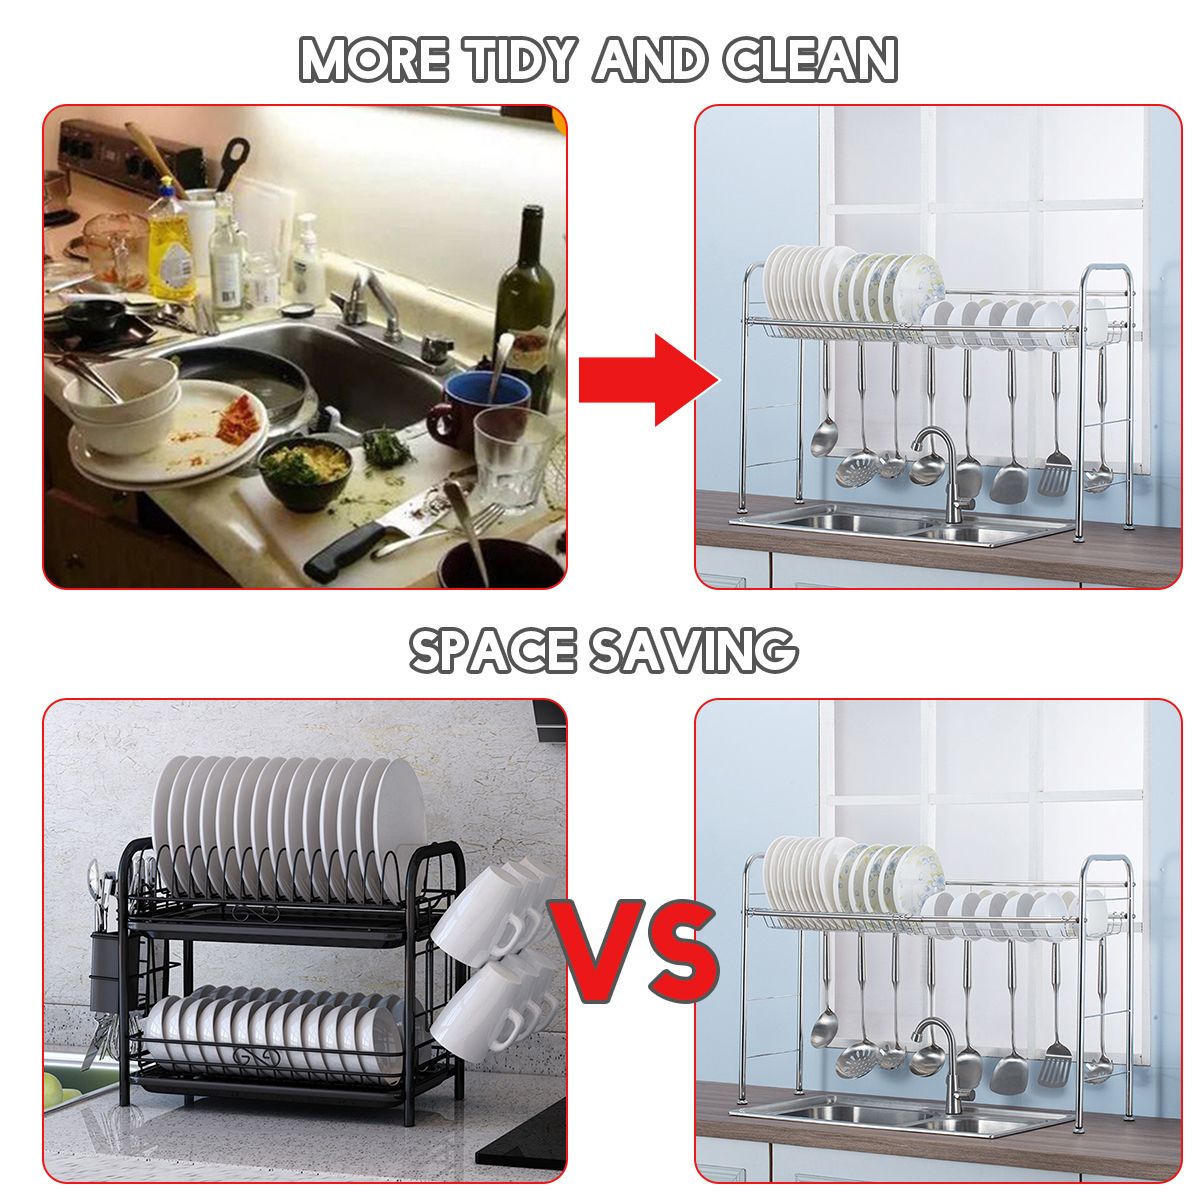 64748494CM-Stainless-Steel-Kitchen-Rack-Dish-Drain-Shelf-Drying-Holder-Over-Sink-1652238